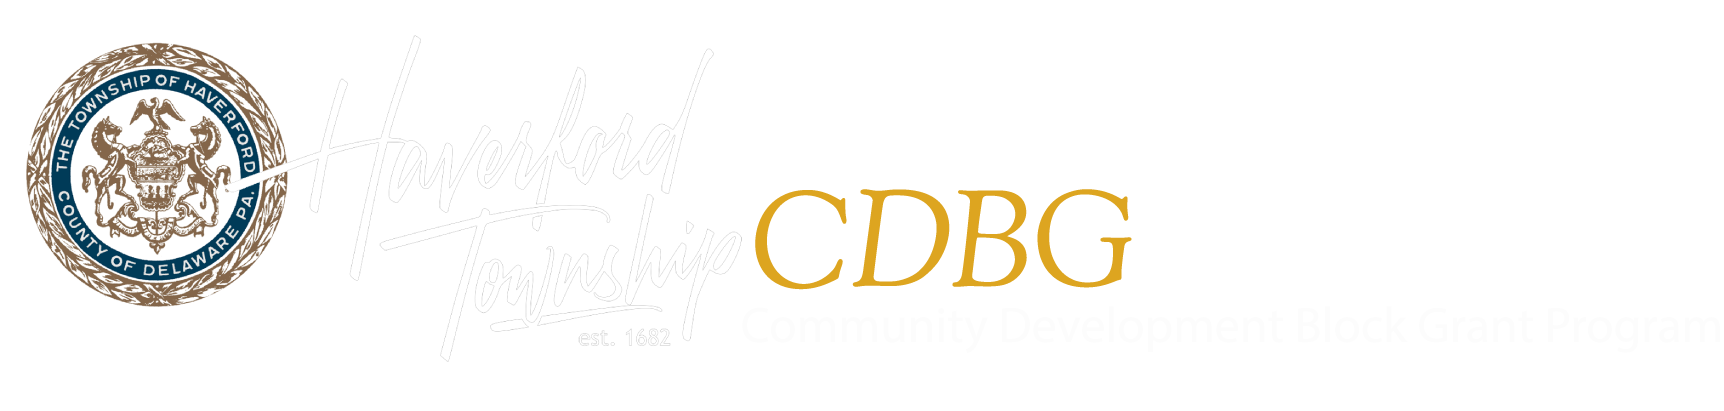 CDBG Logo